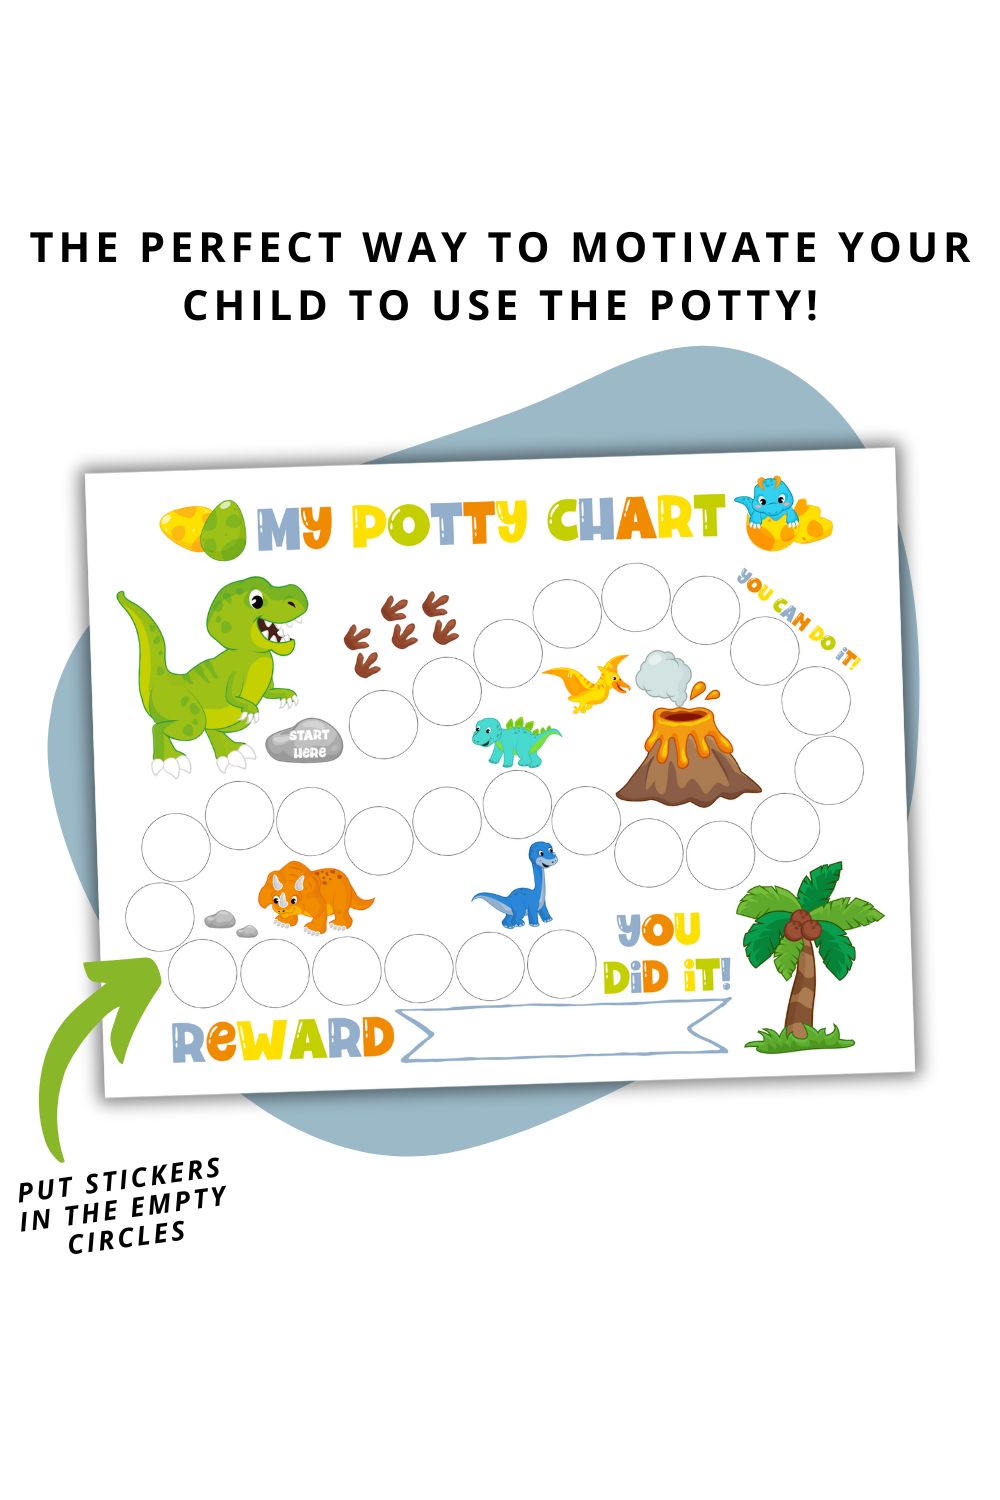 Printable Dinosaur Potty Chart